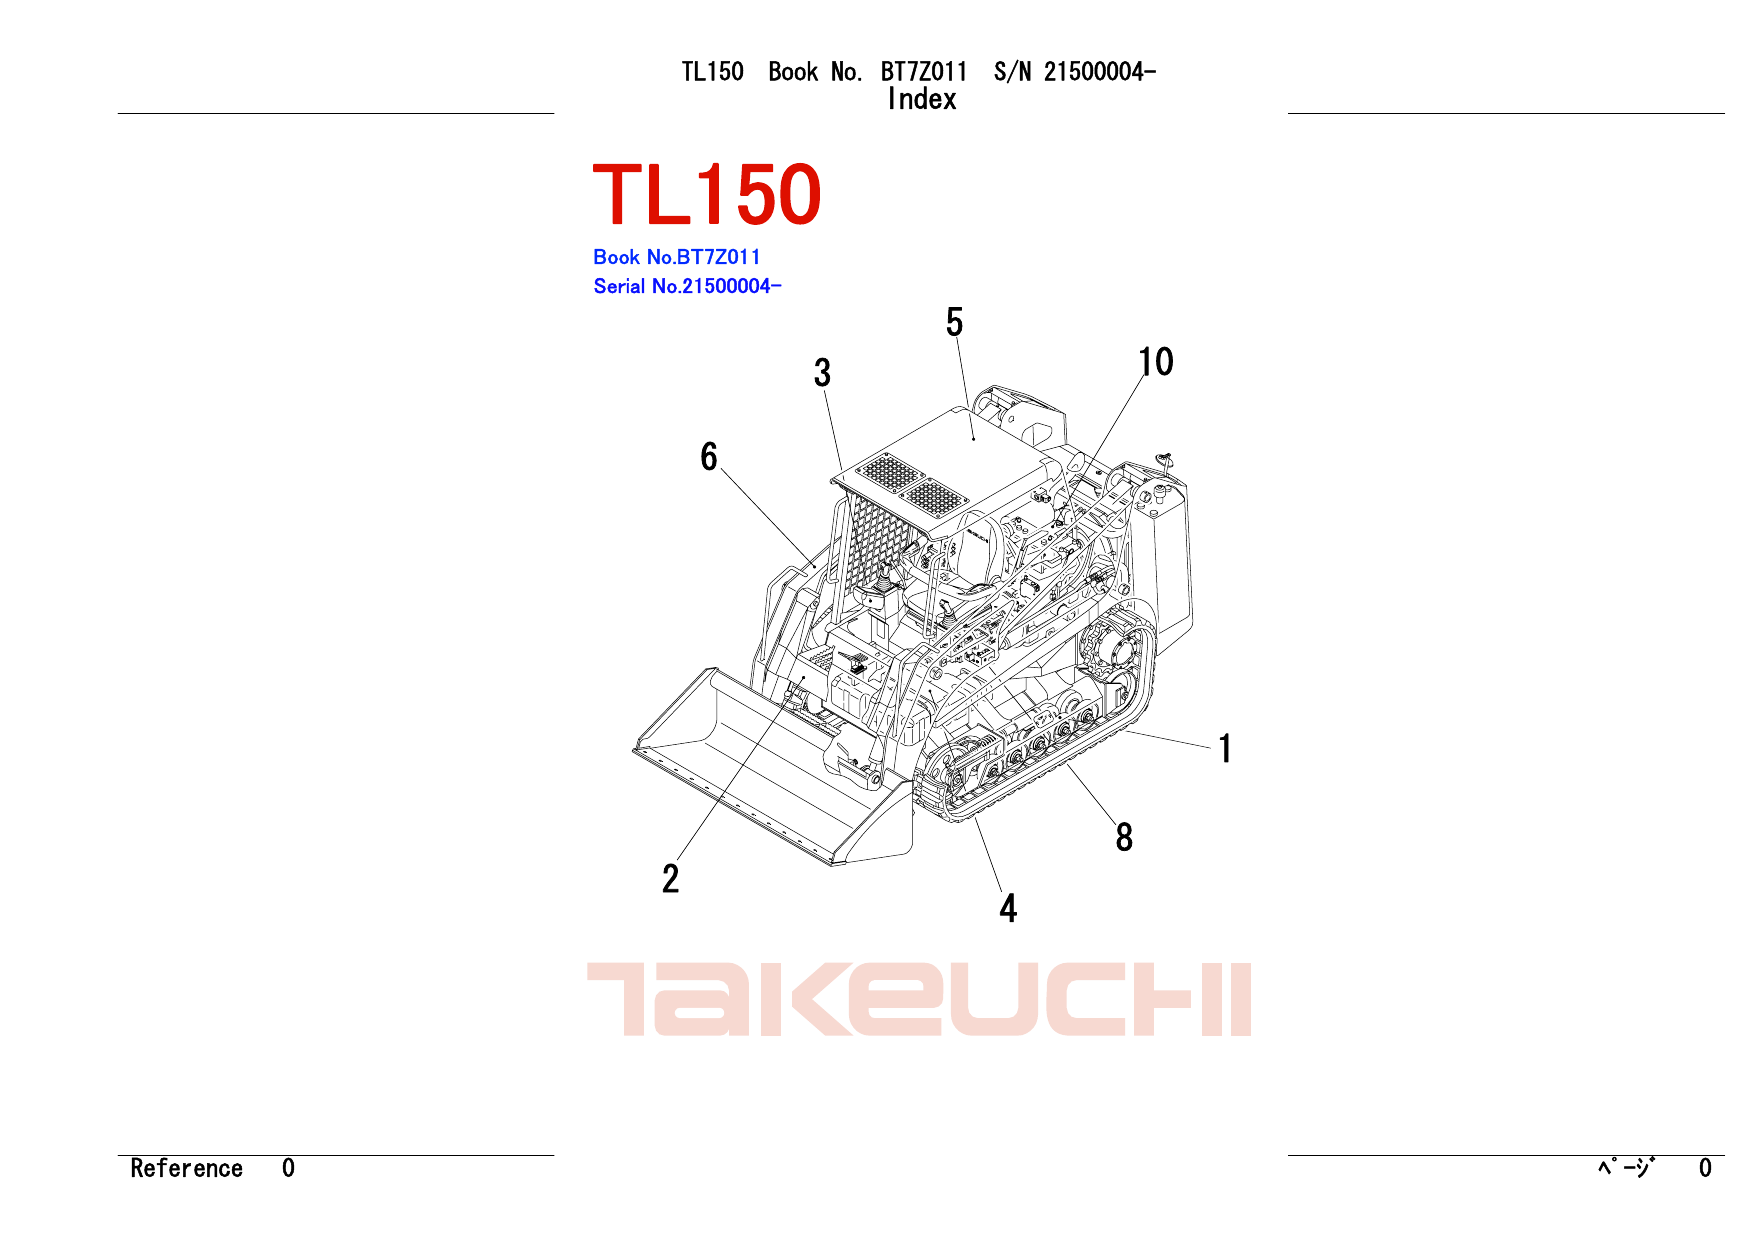 Takeuchi TL150 track loader Parts catalog Preview image 2